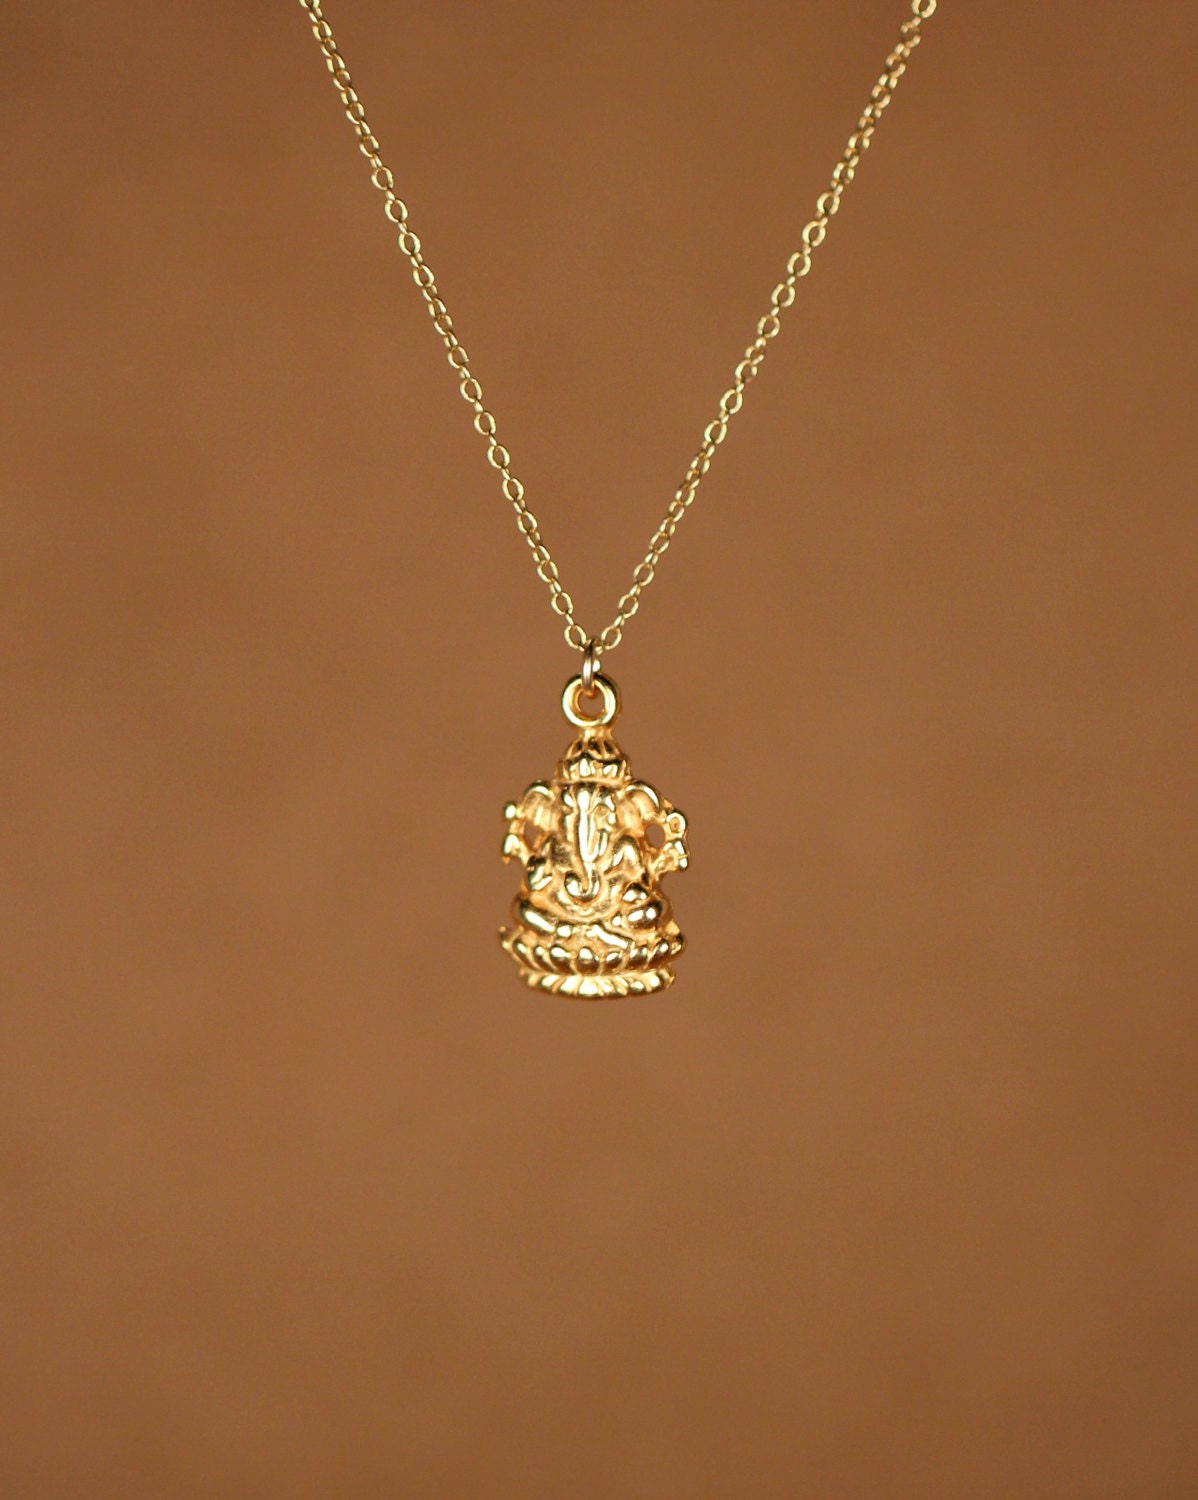 Gold Lord Murugan-Karttikeya Hindu God of War, Power and Strength Pendant  Necklace | Factory Direct Jewelry